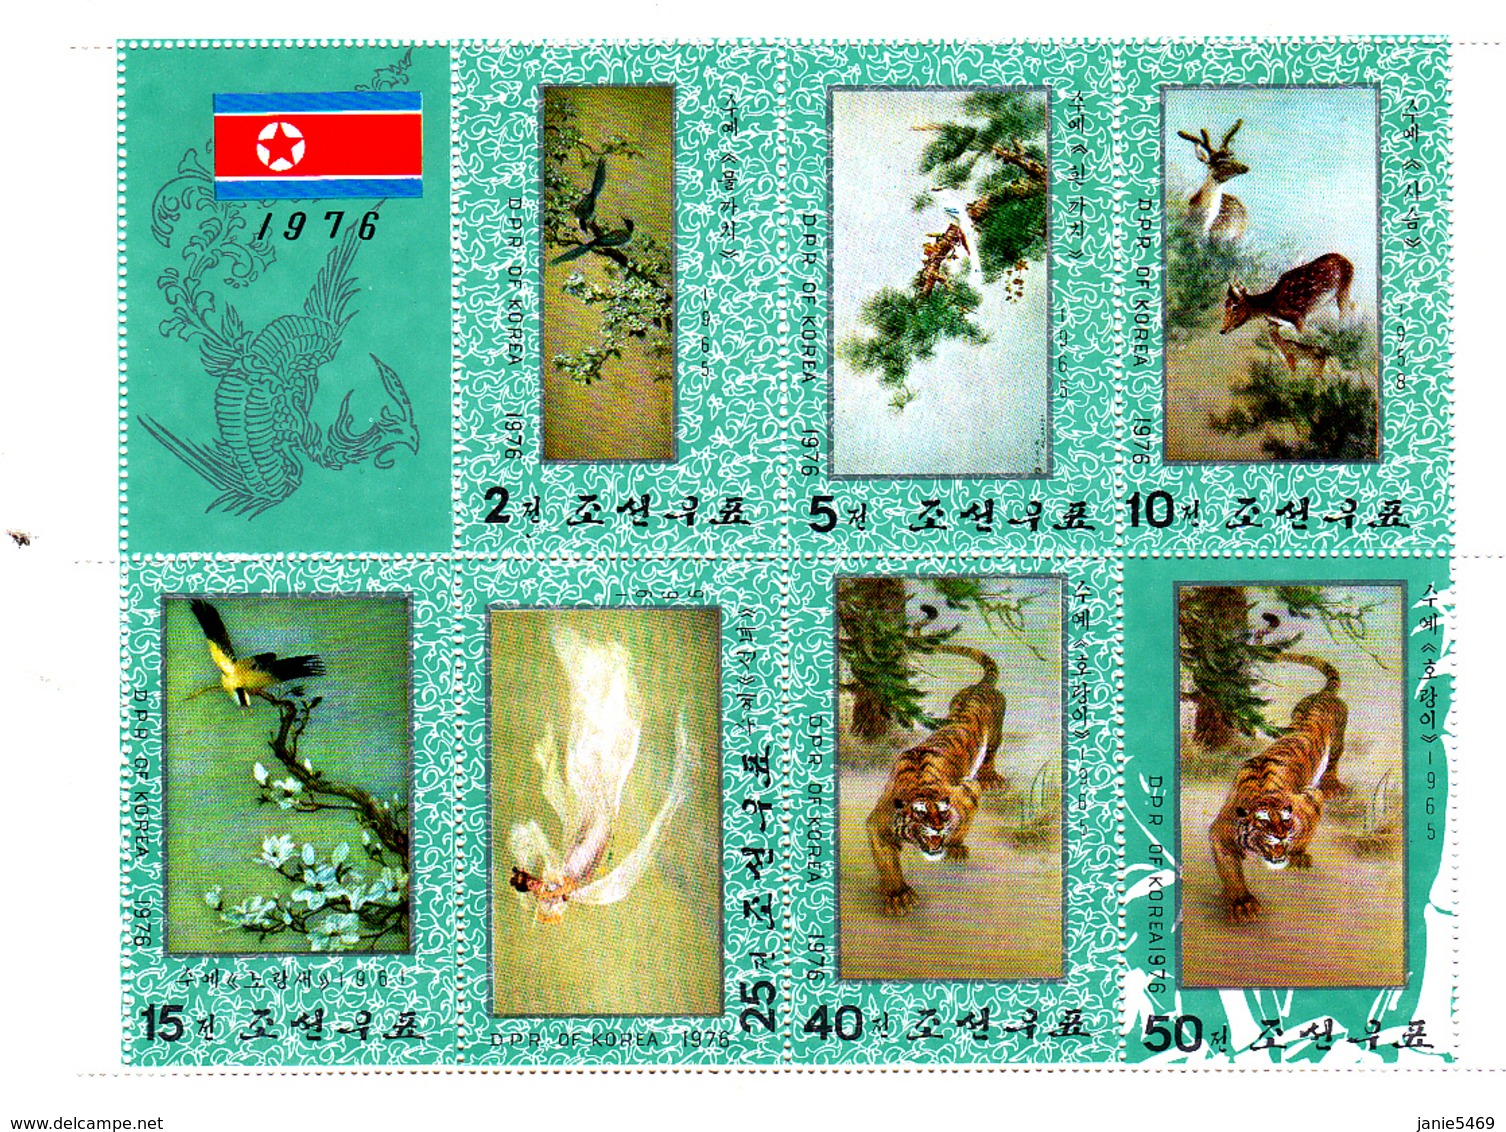 Korea Democratic People's Republic Scott 1518a 1976 Embroidery Sheetlet,mint Never Hinged - Korea, North